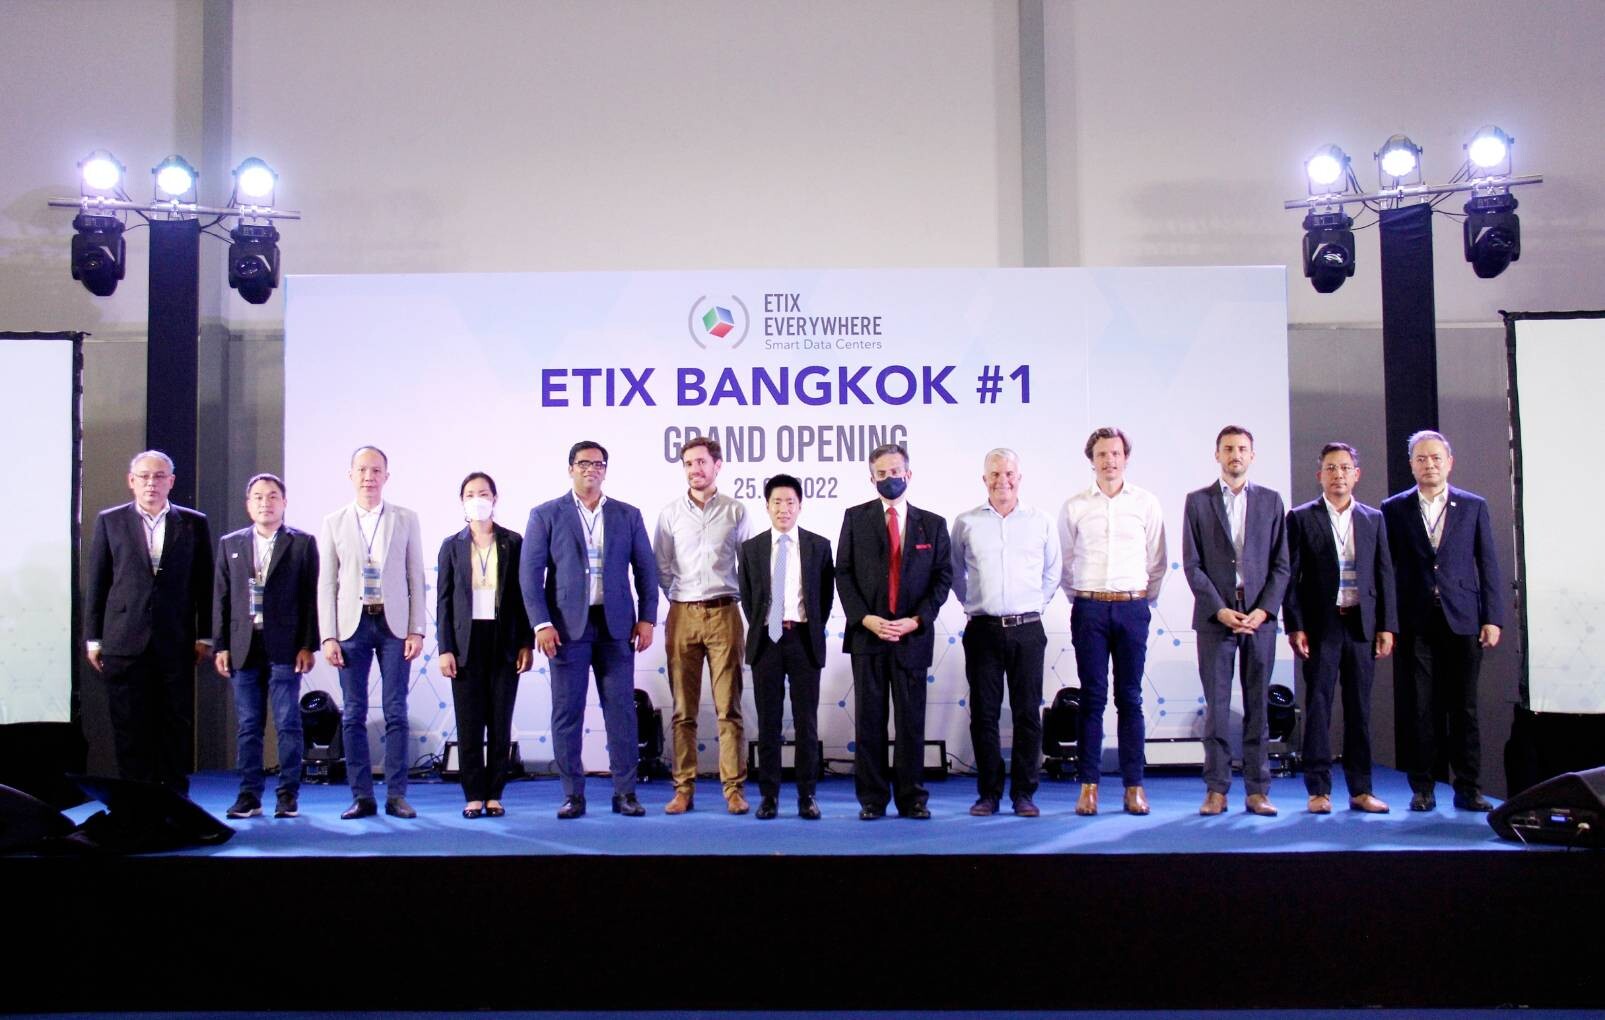 ITEL ผนึกพาร์ทเนอร์ใหม่ ETIX Everywhere เปิดตัว "ETIX Bangkok #1" อย่างเป็นทางการ